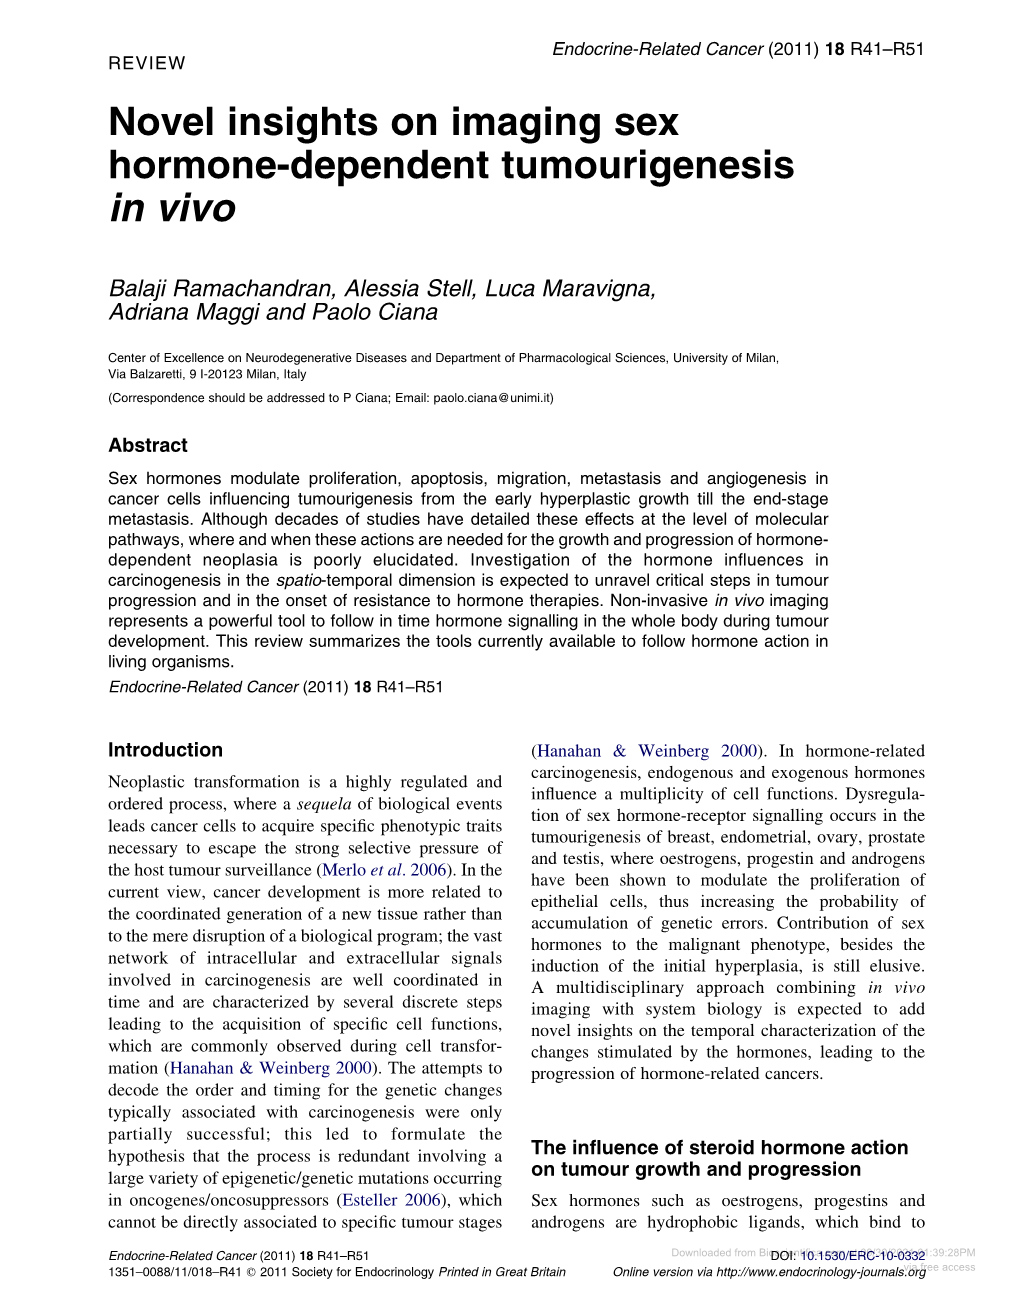 Novel Insights on Imaging Sex Hormone-Dependent Tumourigenesis in Vivo